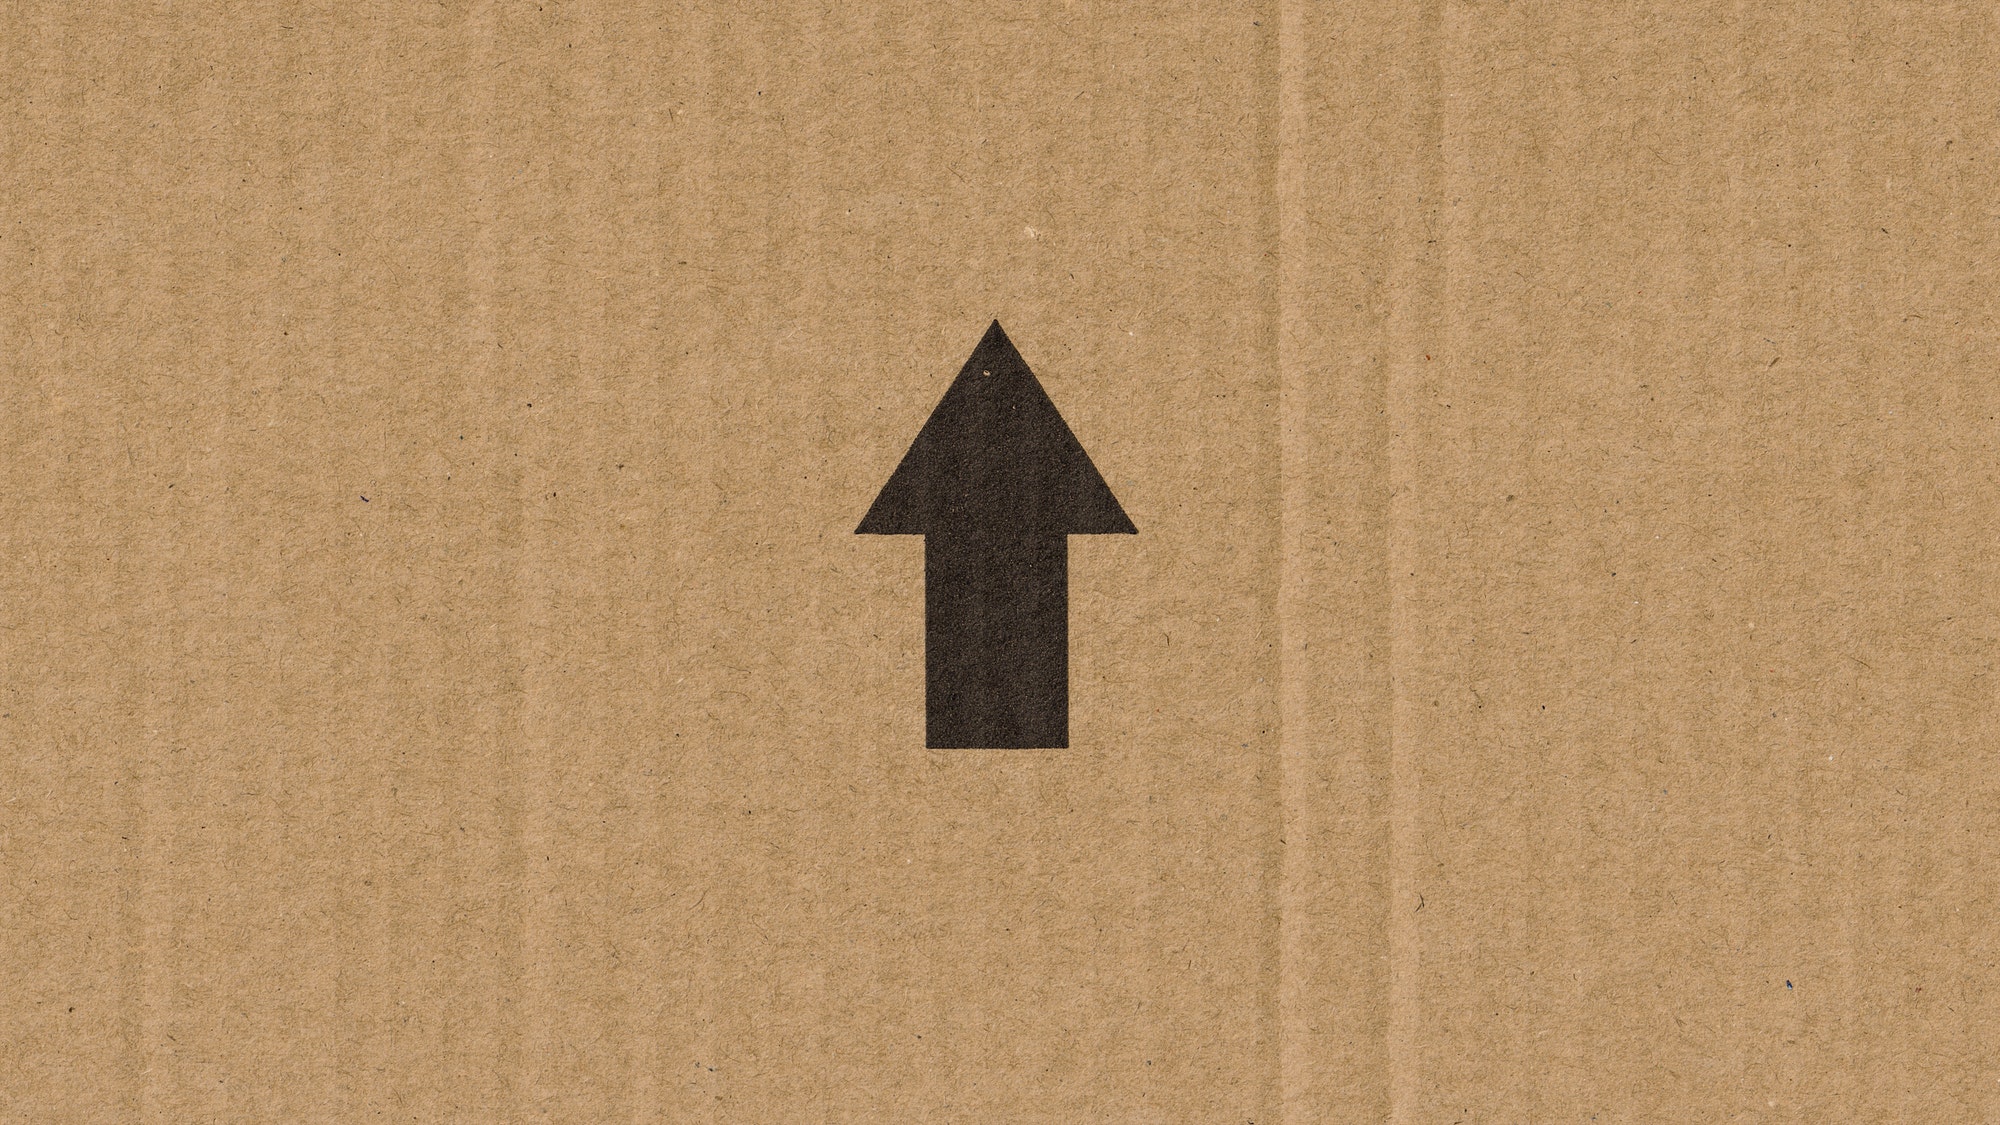 black arrow on a cardboard box